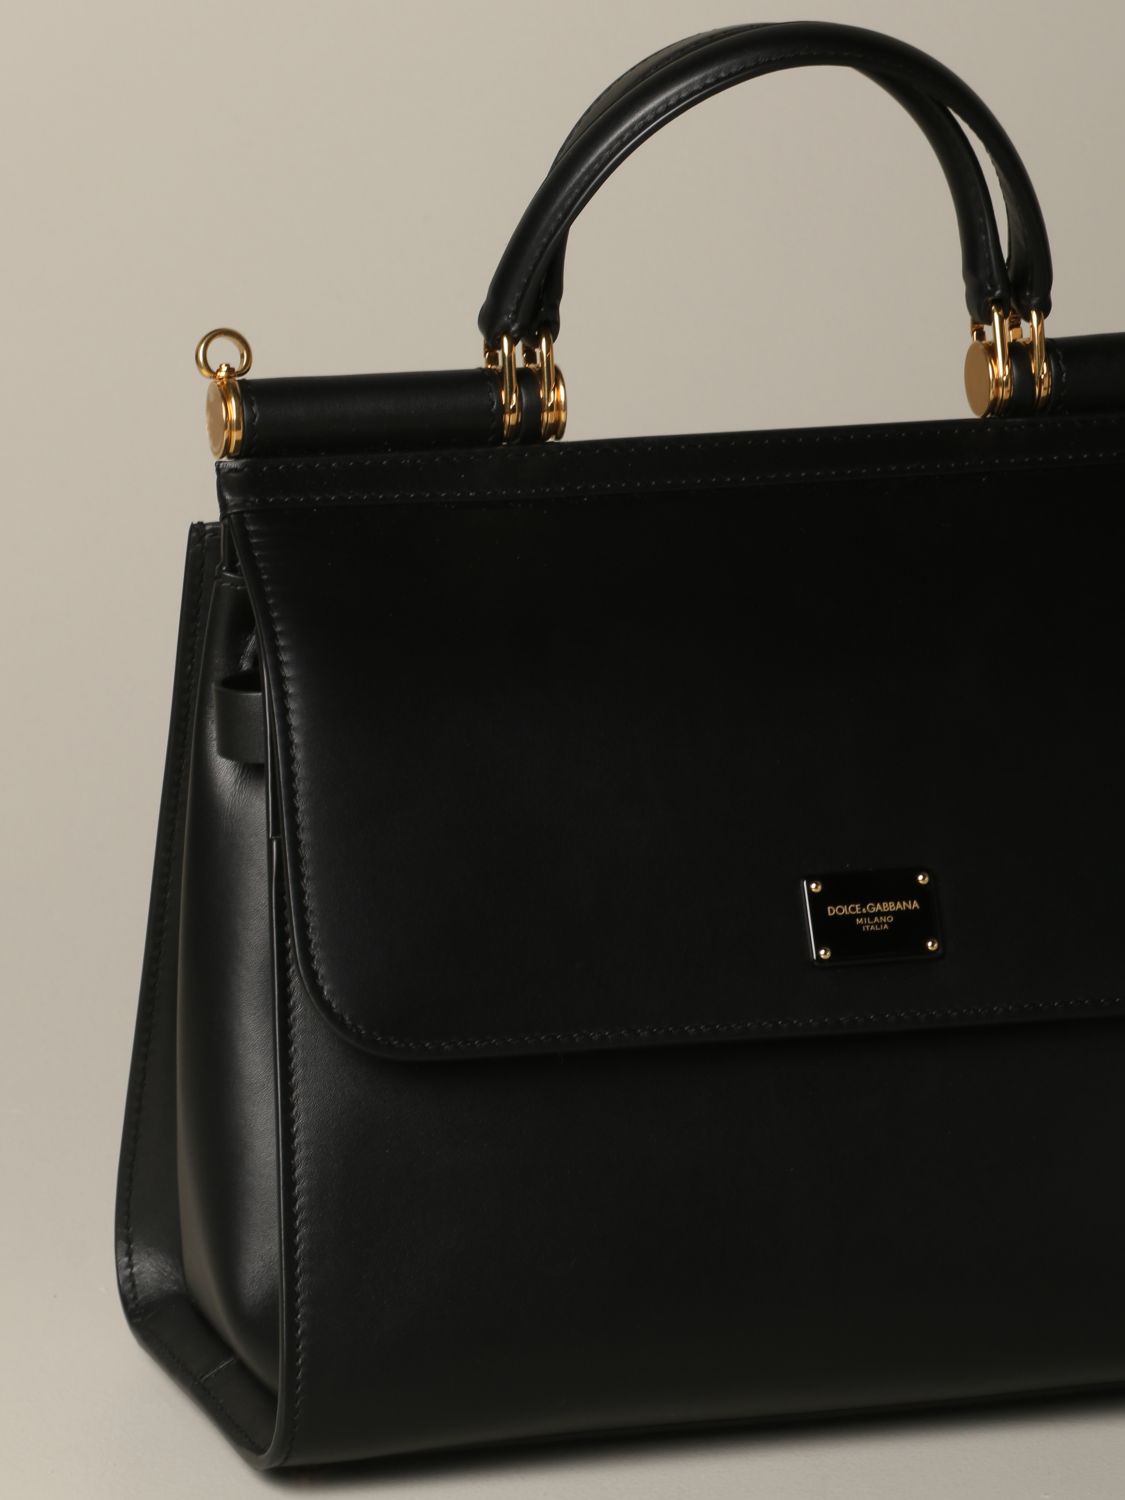 Dolce & Gabbana Sicily 58 handbag in genuine leather with logo